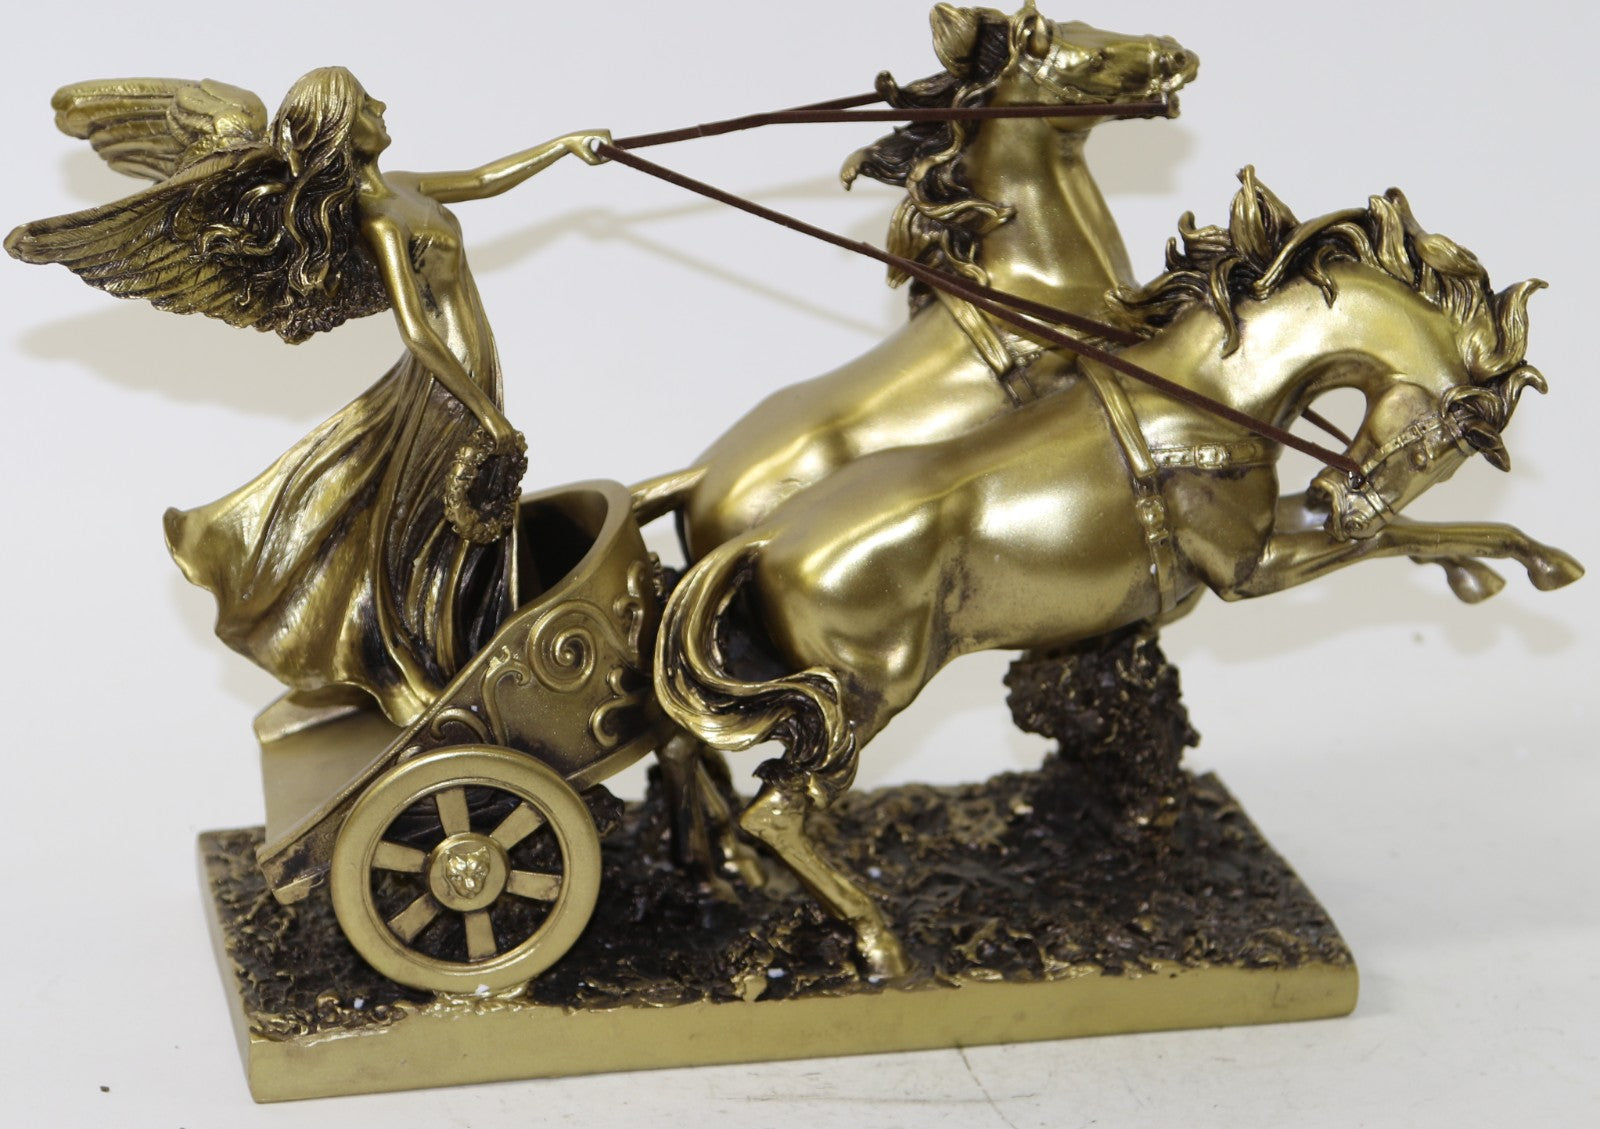 Ancient Roman Warrior Chariot Sculpture in Greek Mythology Bronze Finish Modern Decorative